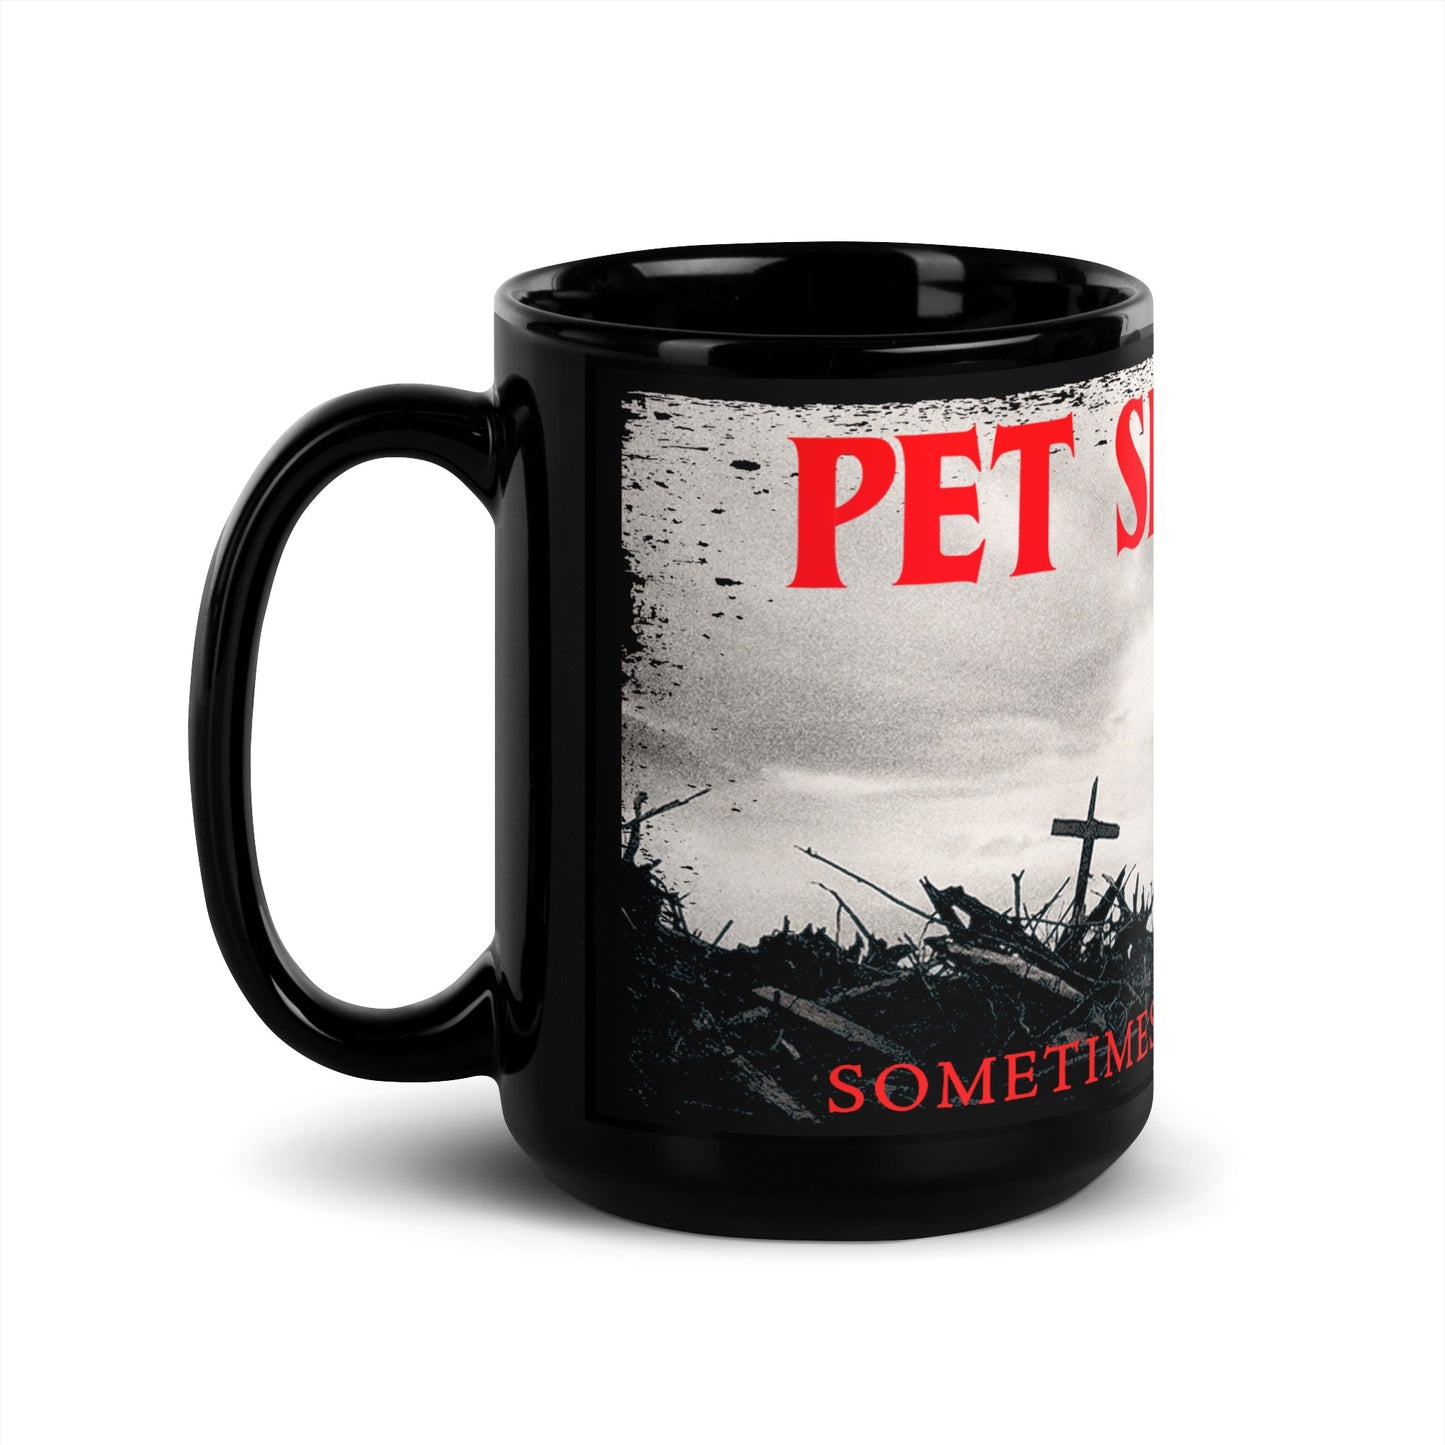 Pet Sematary (2019) Sometimes Dead is Better Black Mug